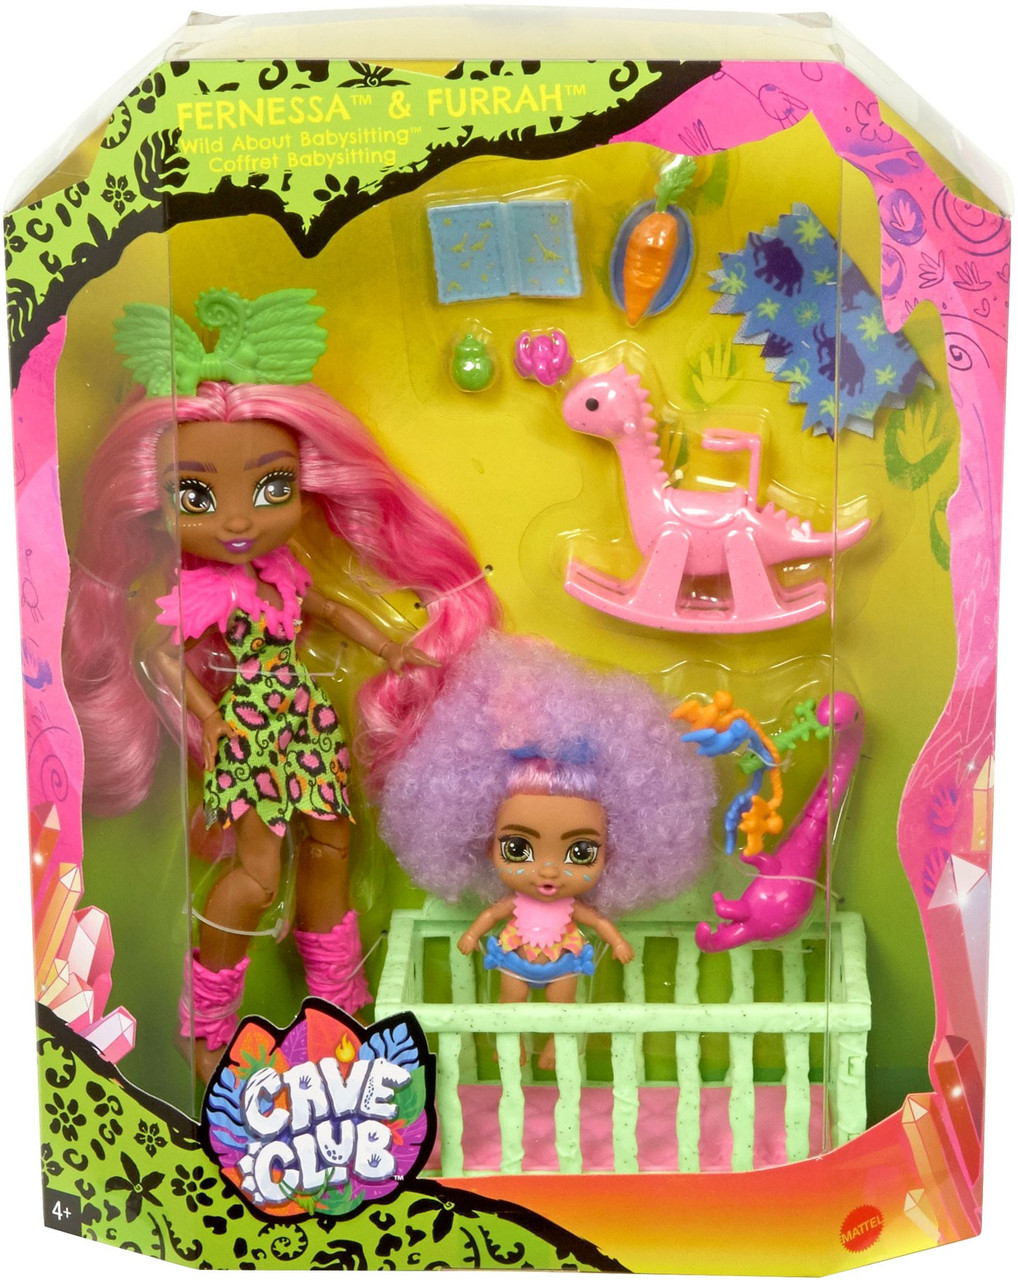 Cave Club Wild About Babysitting Playset With Fernessa Furrah Dolls Mattel Toywiz - babysitting horror story roblox